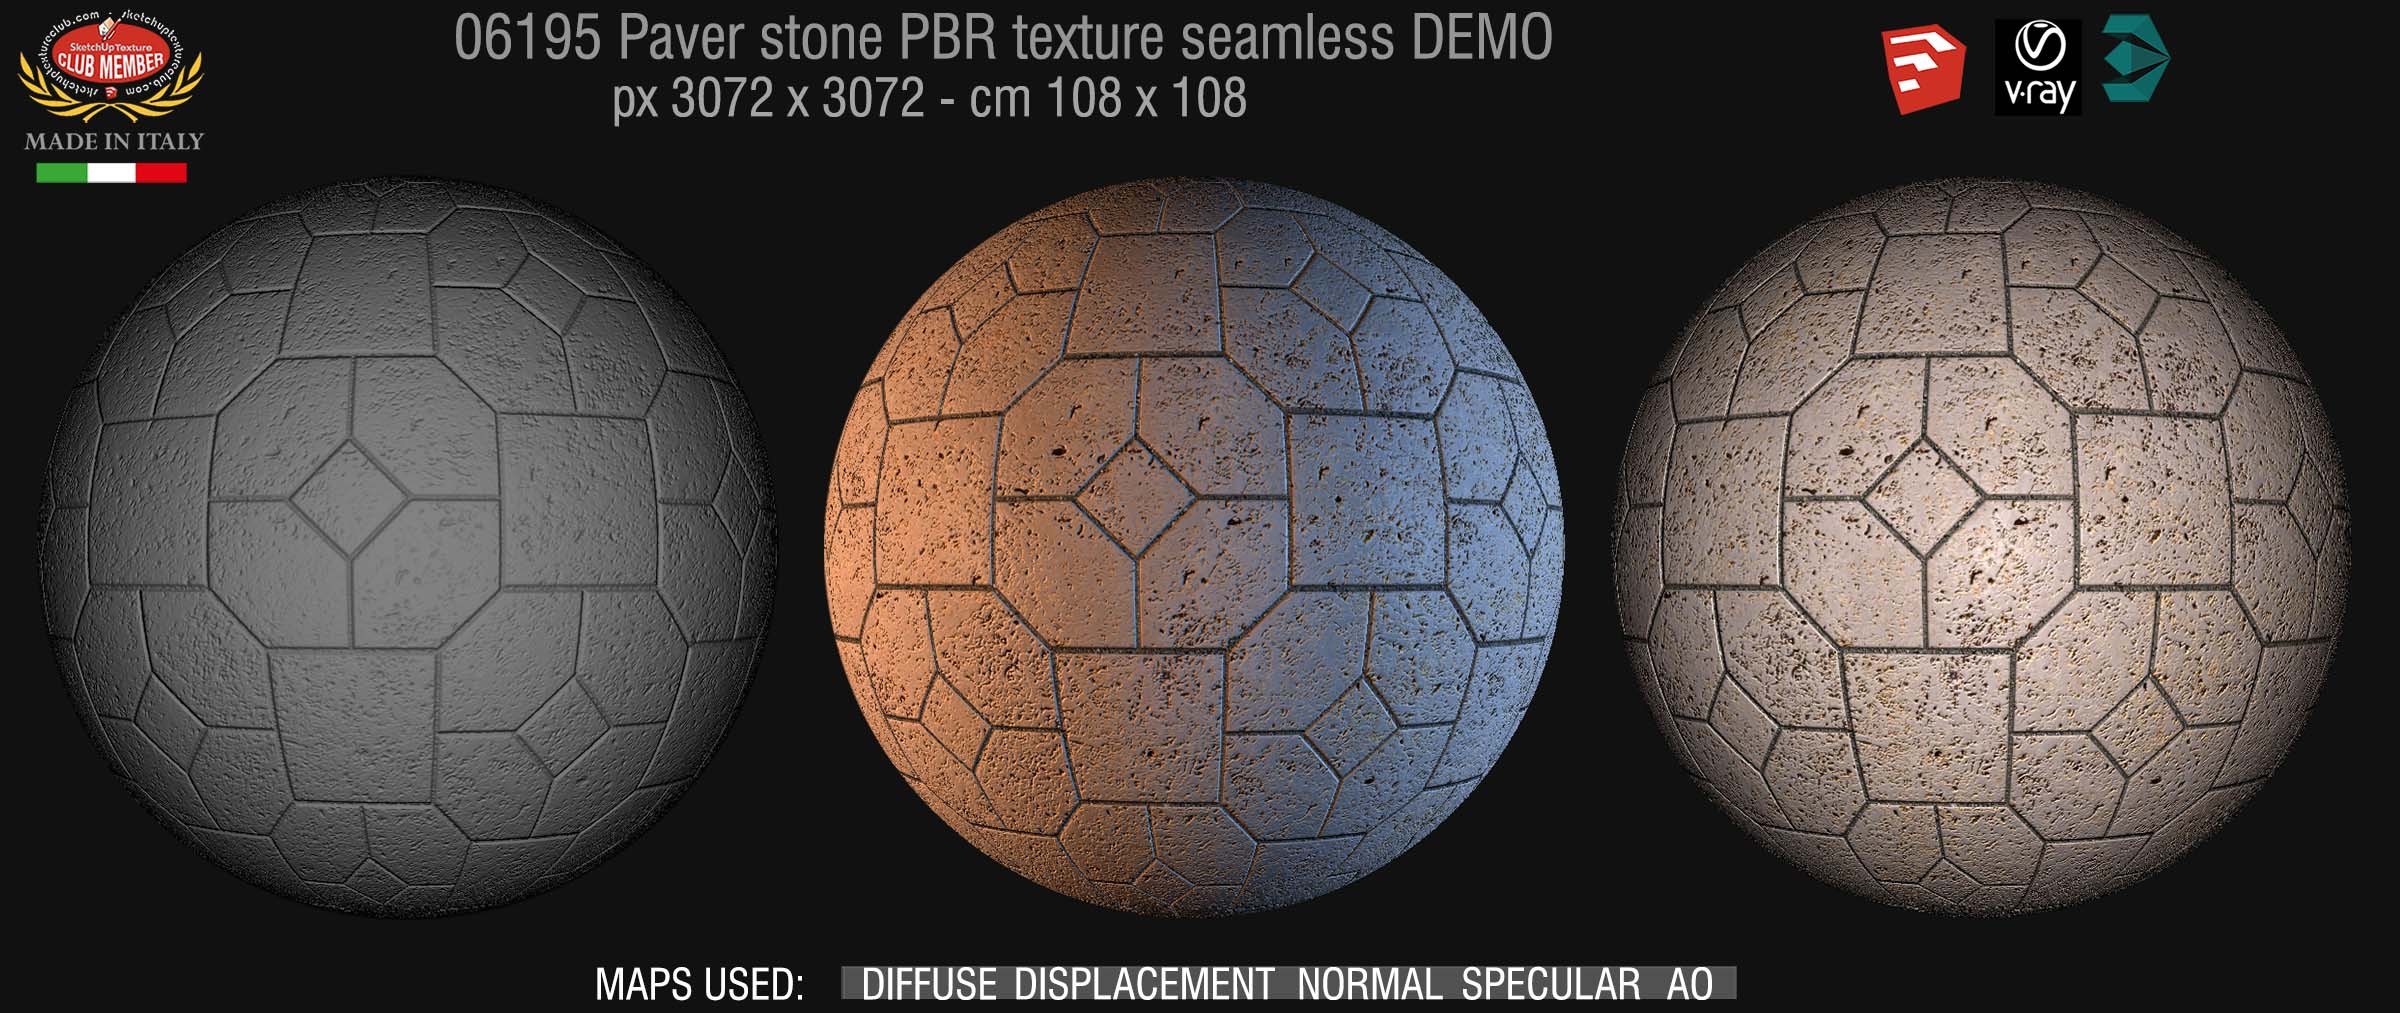 6195 Pavers stone PBR texture seamless DEMO